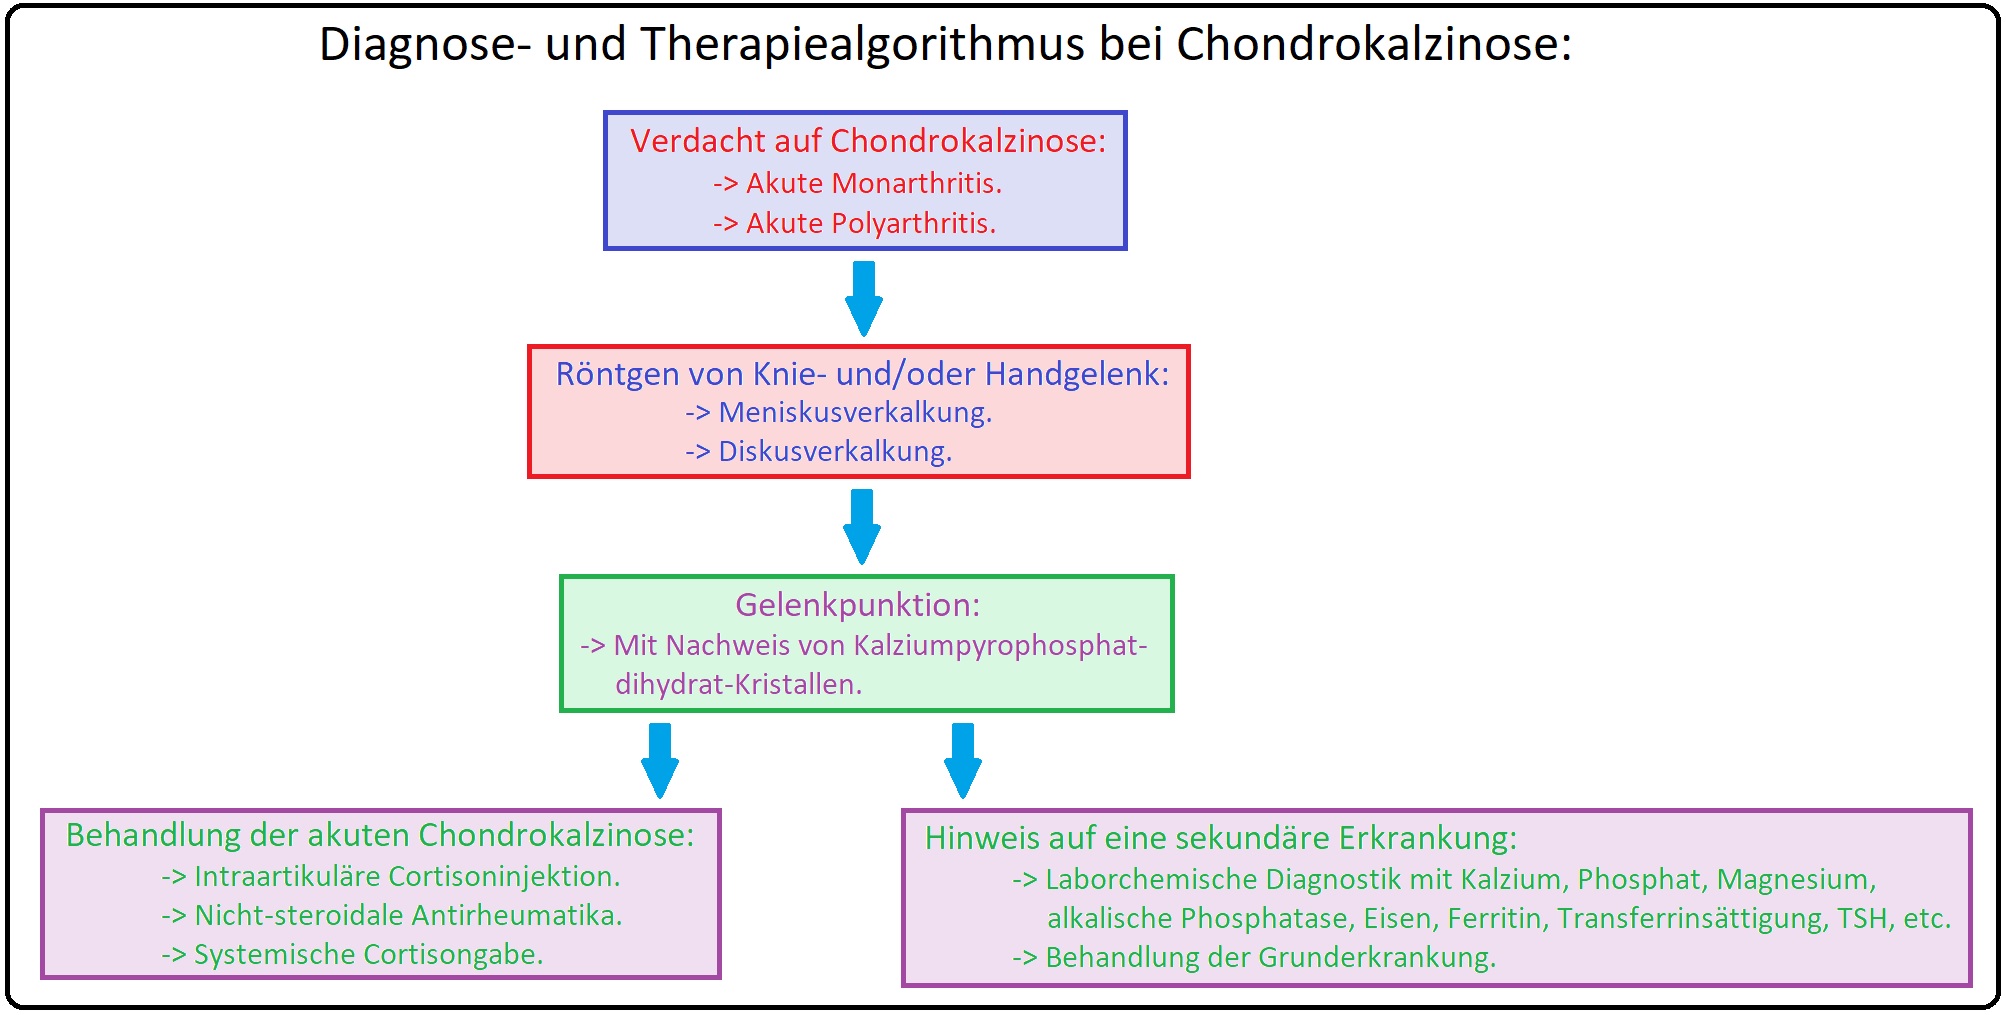 965 Diagnose und Therapiealgorithmus bei Chondrokalzinose